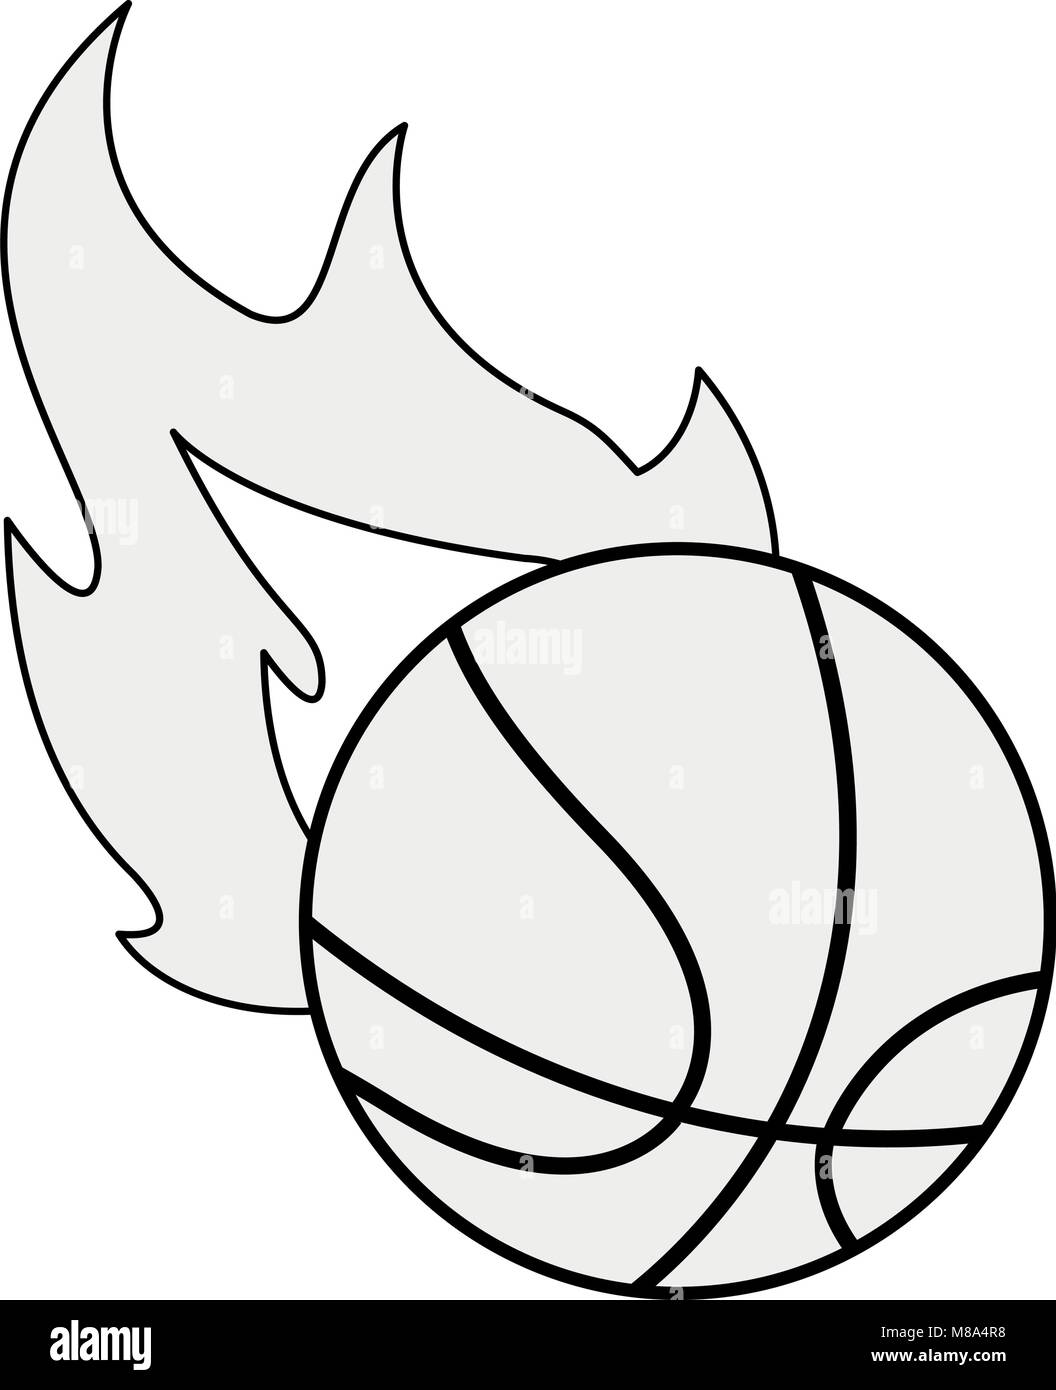 Basketball ball on fire vector illustration graphic design Stock Vector  Image & Art - Alamy